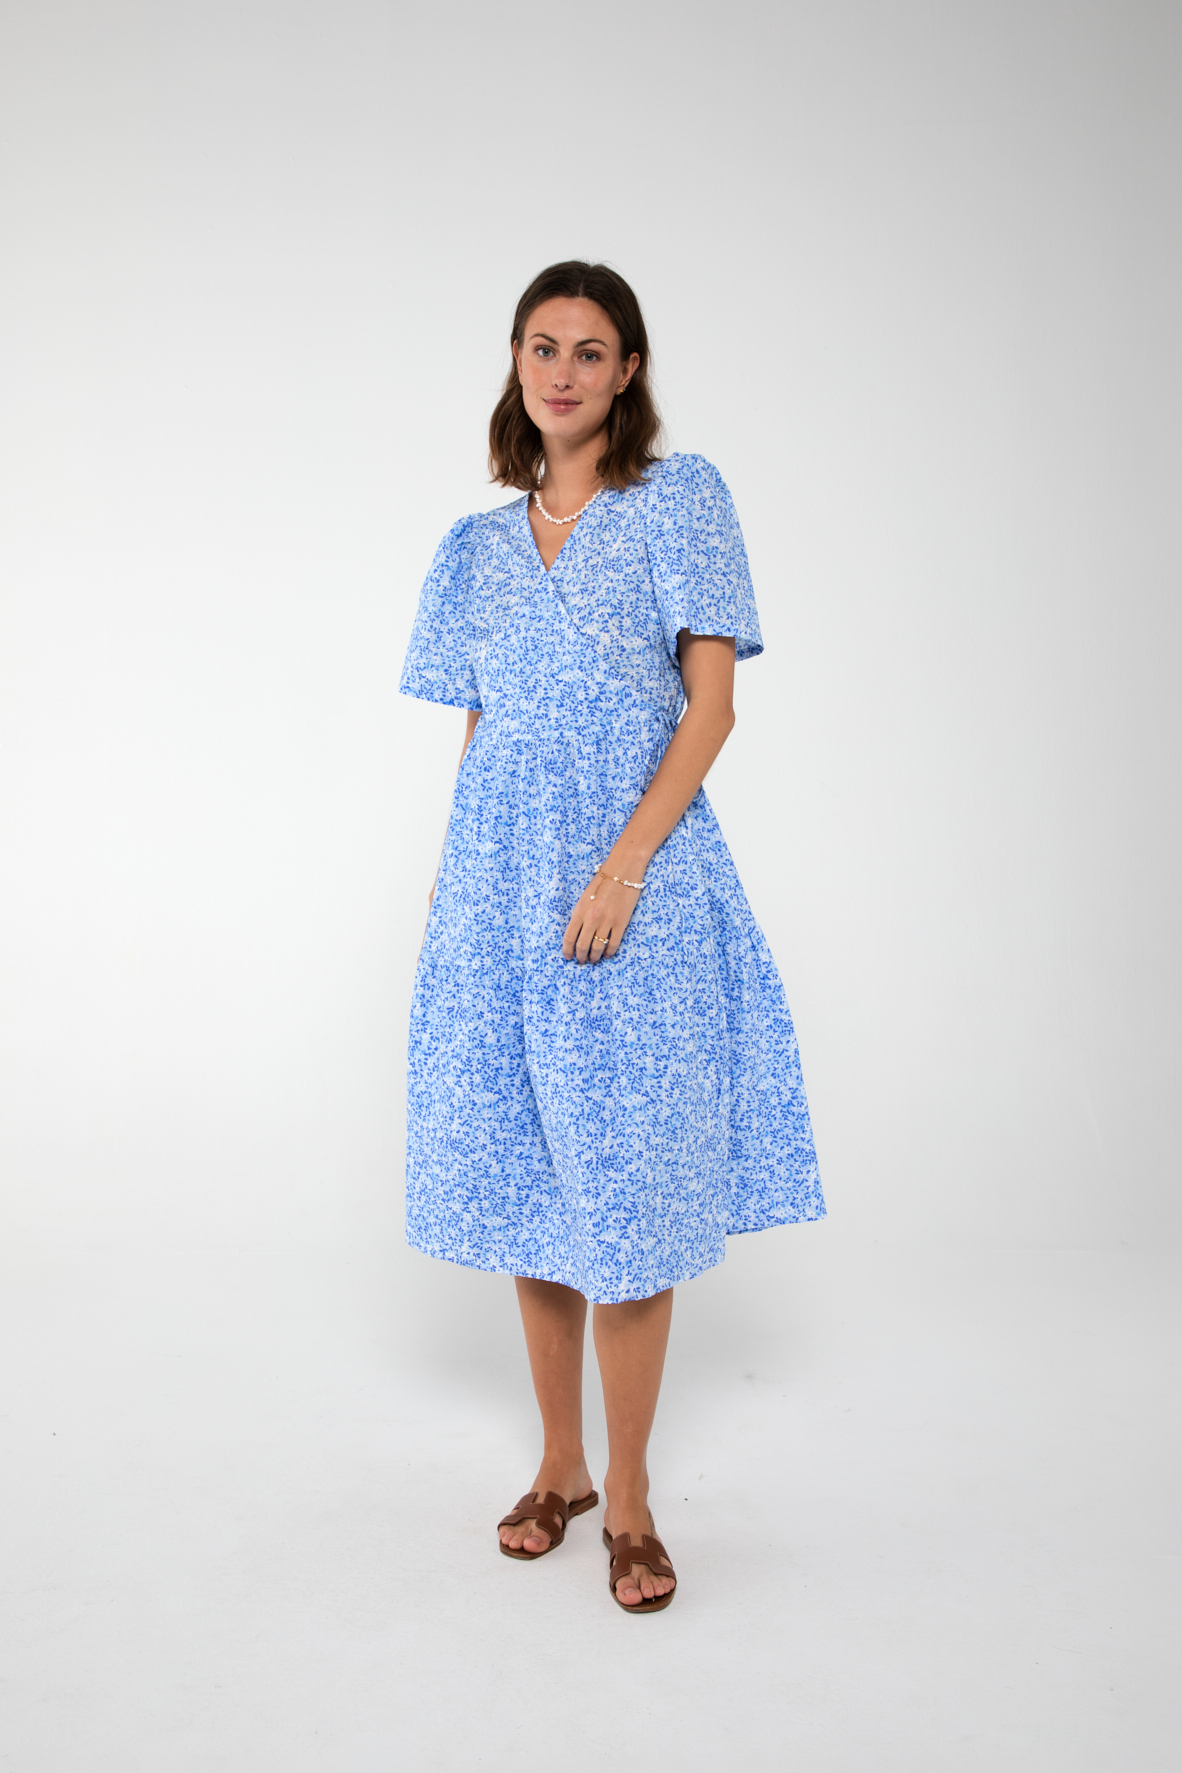 Caisa Blue Print Dress front